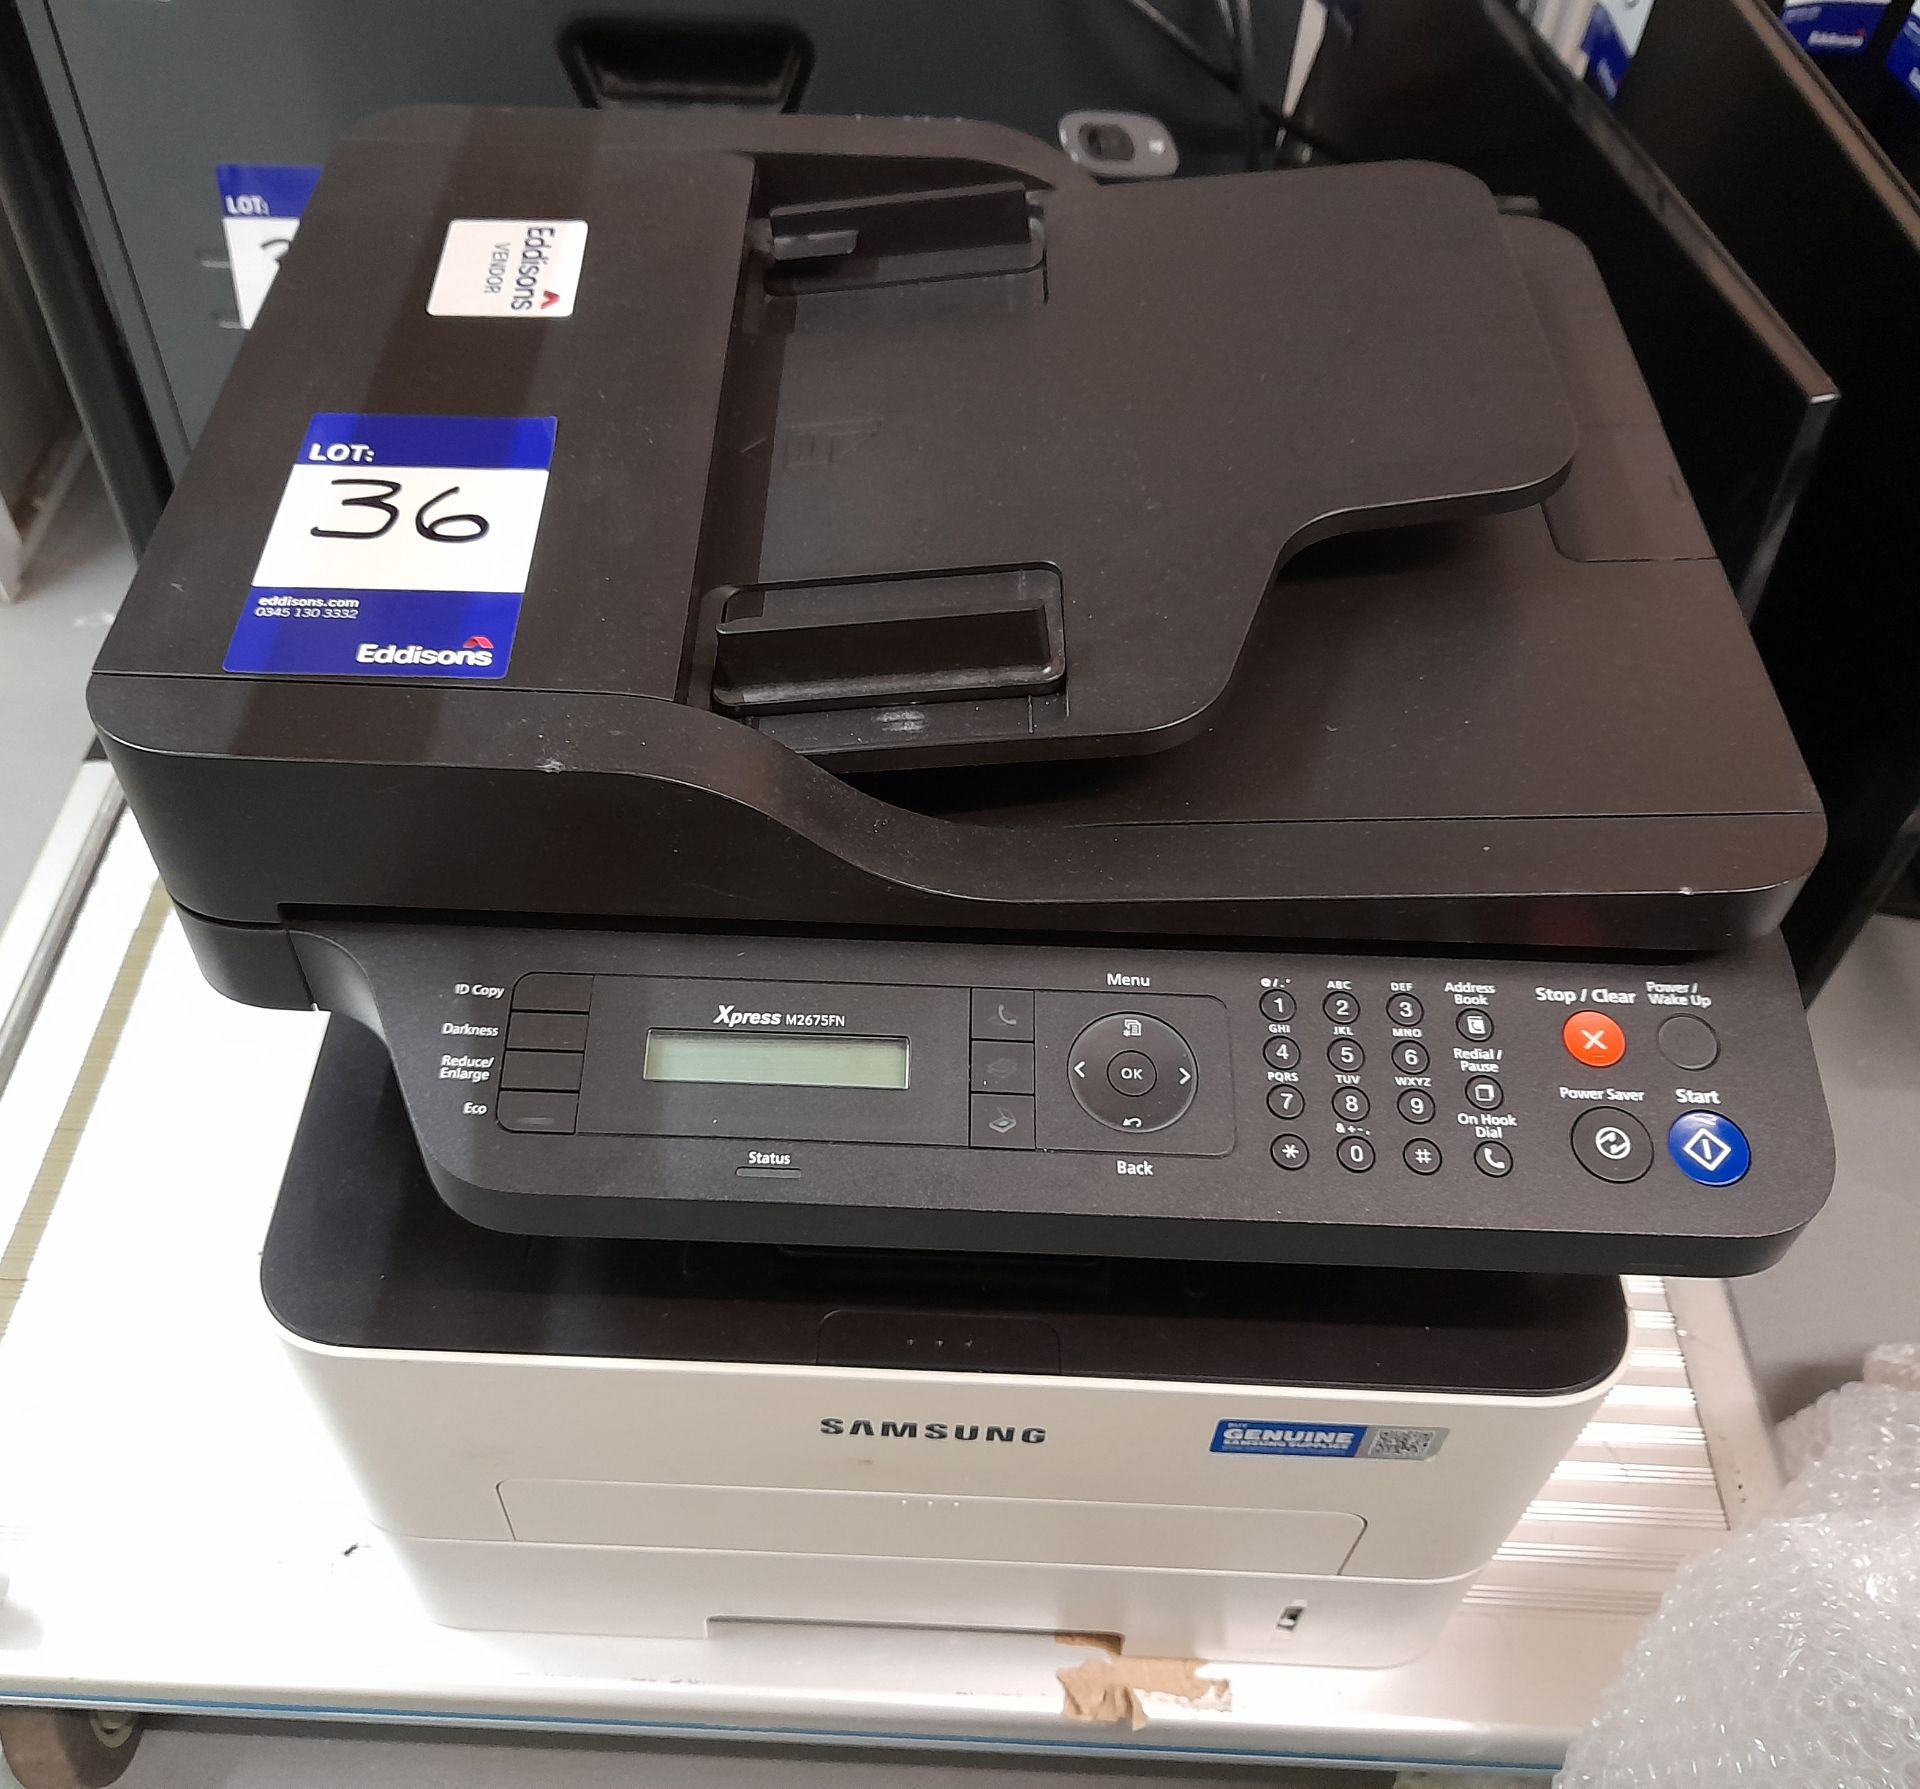 Samsung Xpress M2675FN printer